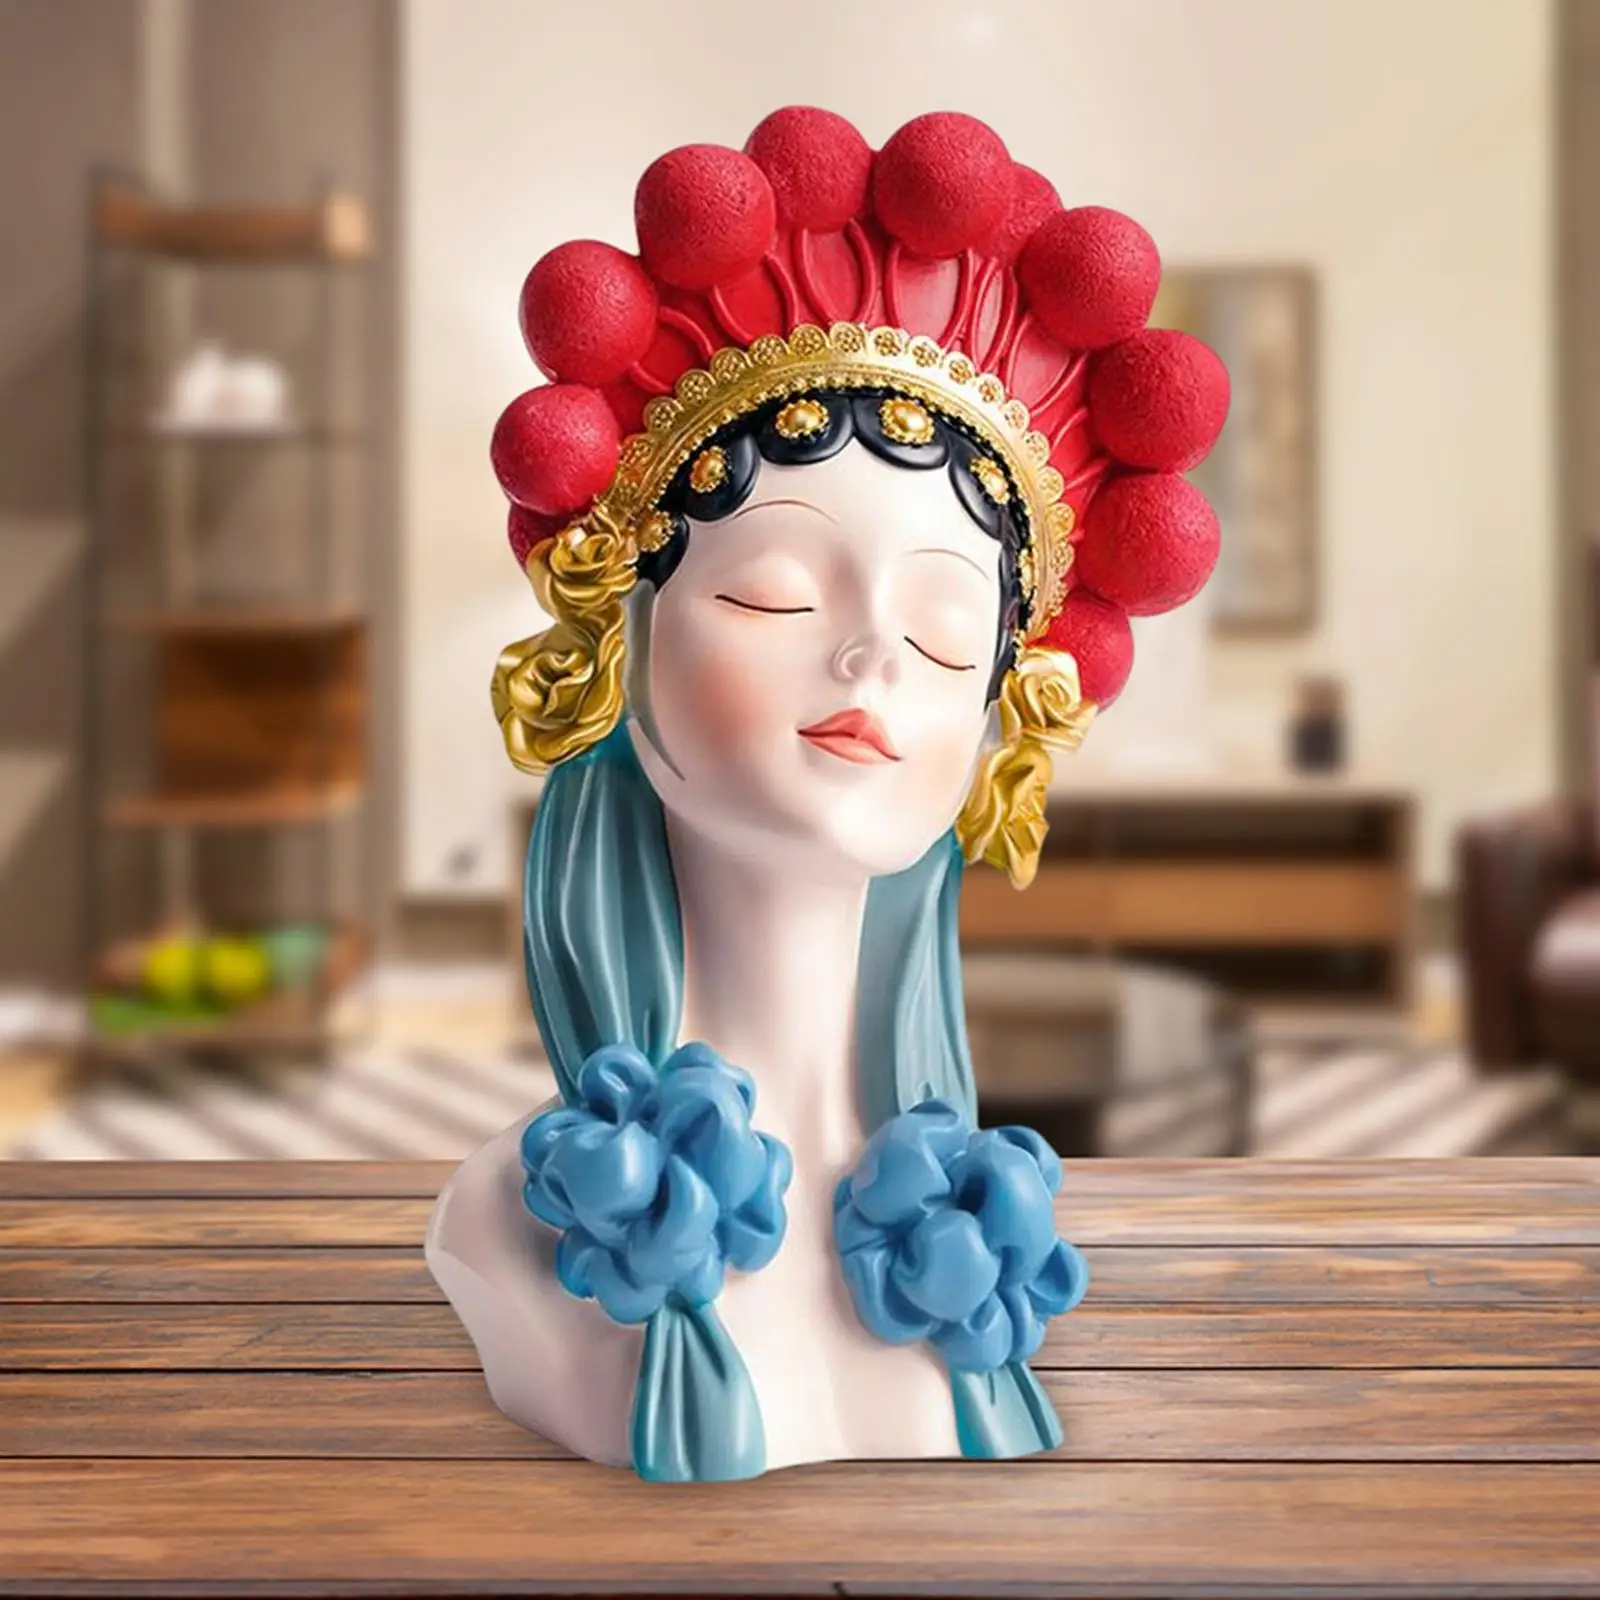 Opera Girls Statue Resin Craft Chinese Traditional Girls Figurine for Decor